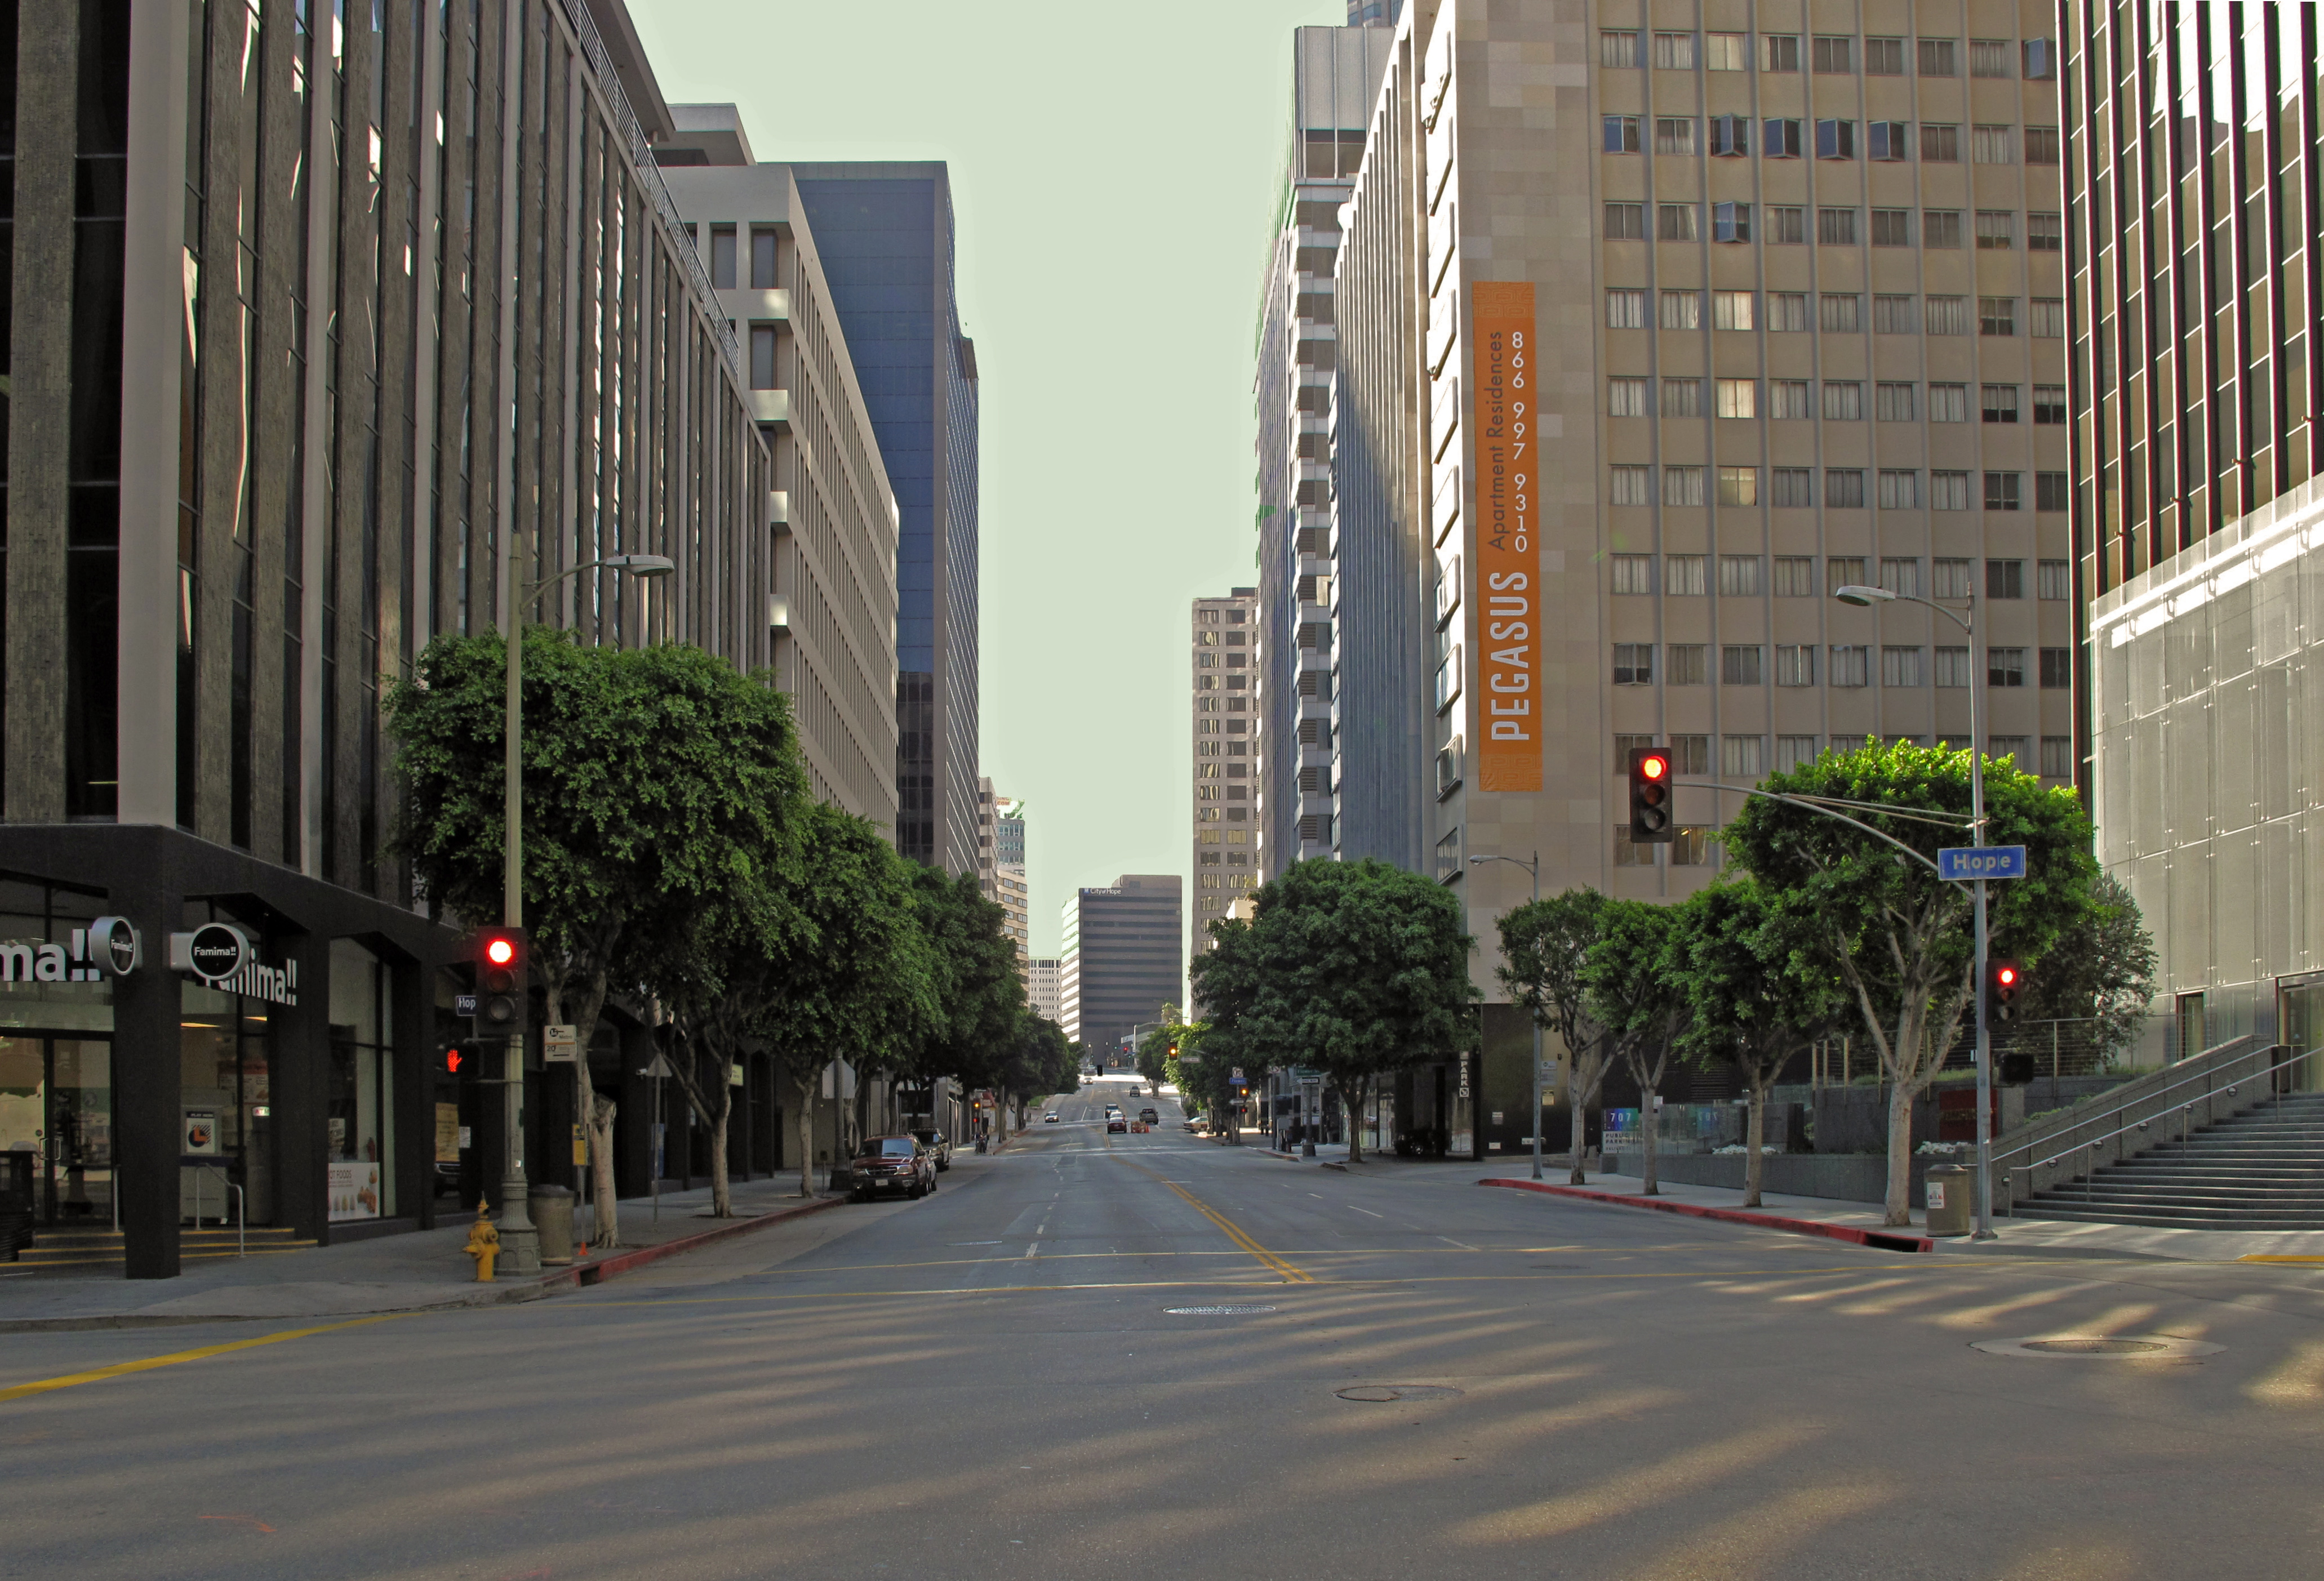 Wilshire_Boulevard_at_Hope_Street,_downtown_Los_Angeles,_California.jpg